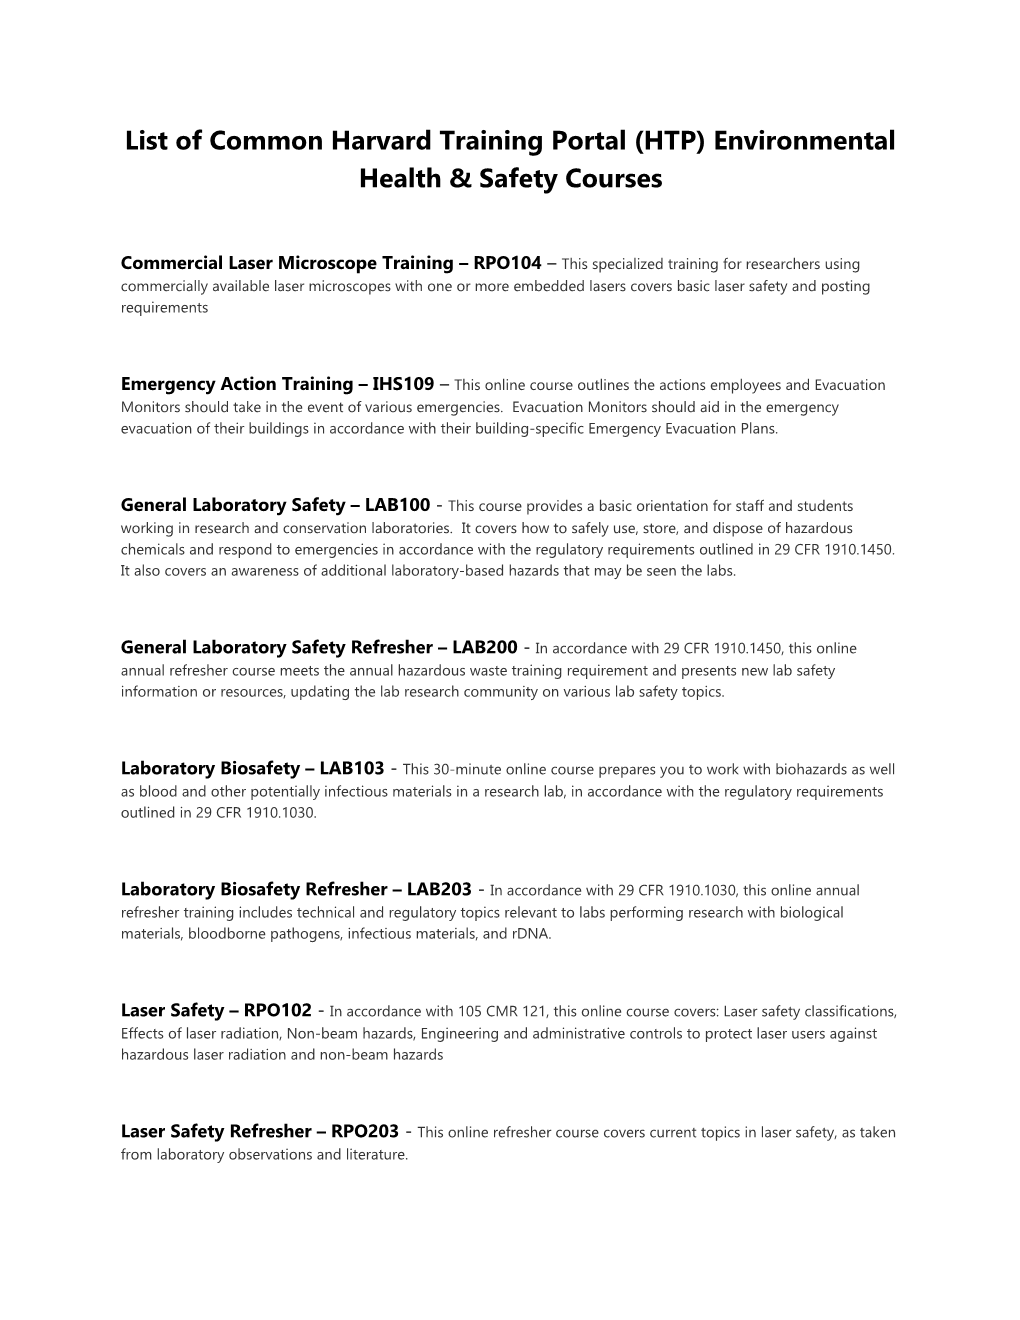 List of Common Harvard Training Portal (HTP) Environmental Health & Safety Courses